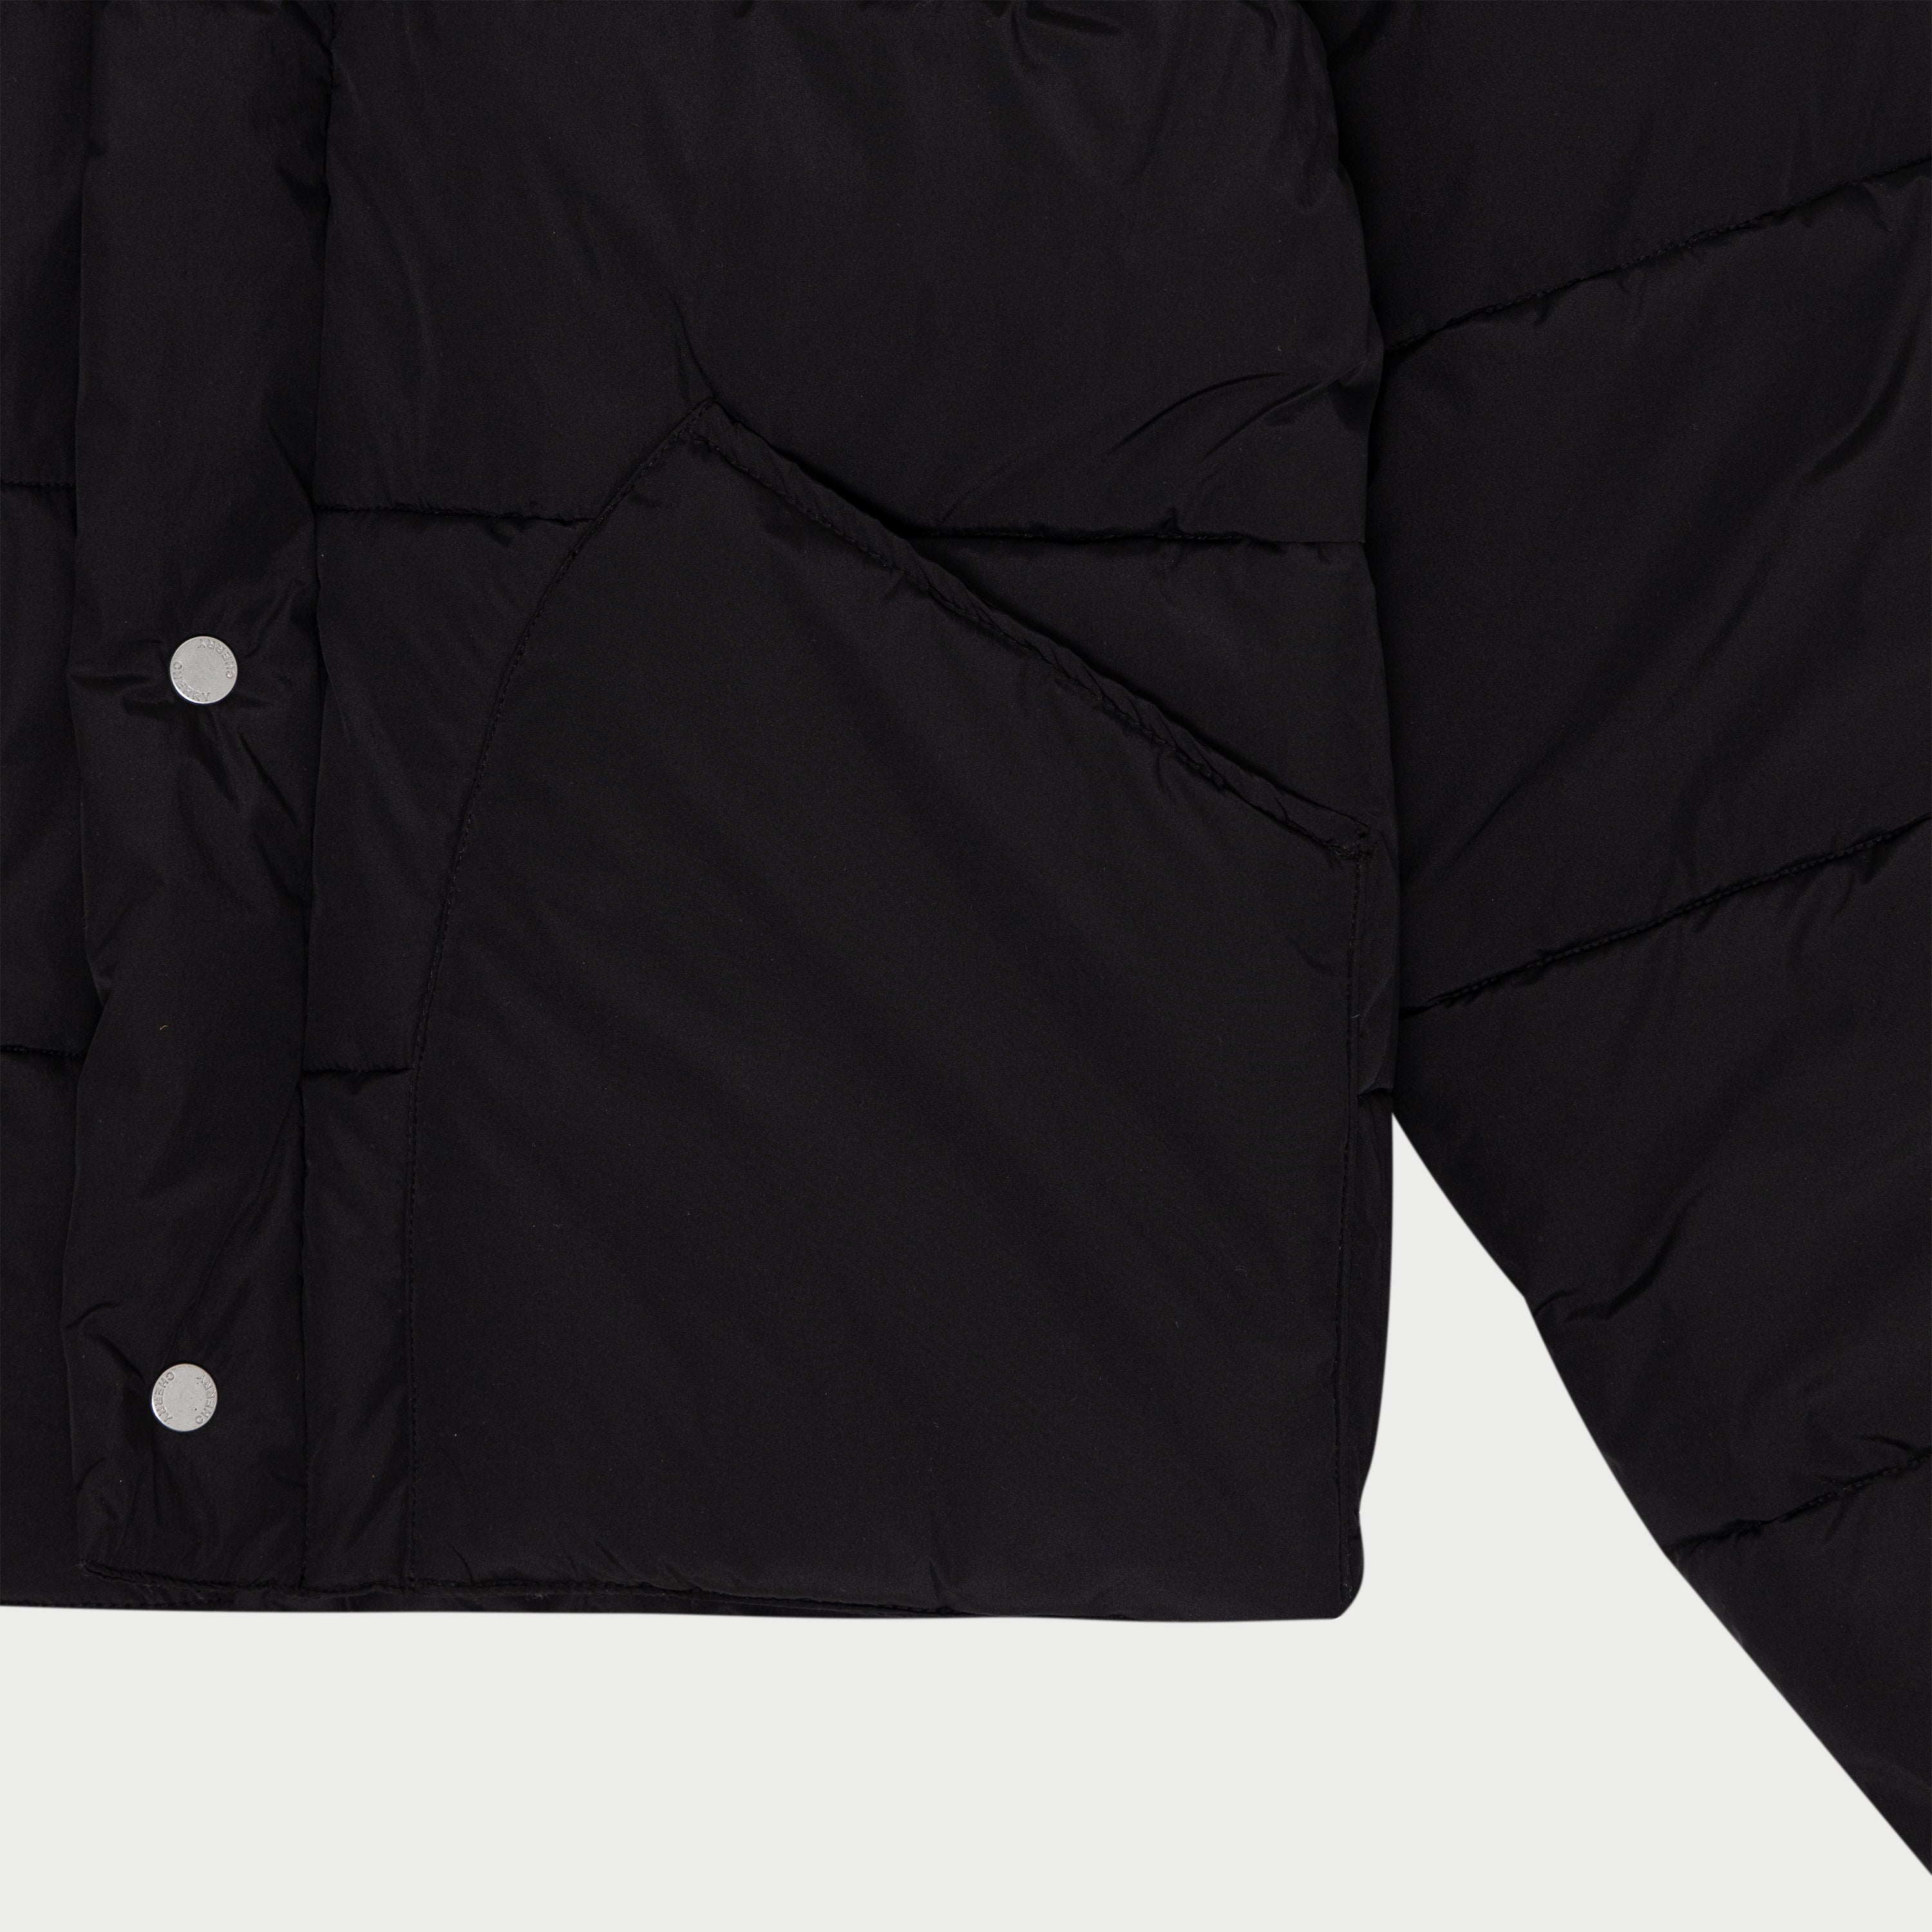 Western Puffer Jacket (Black)